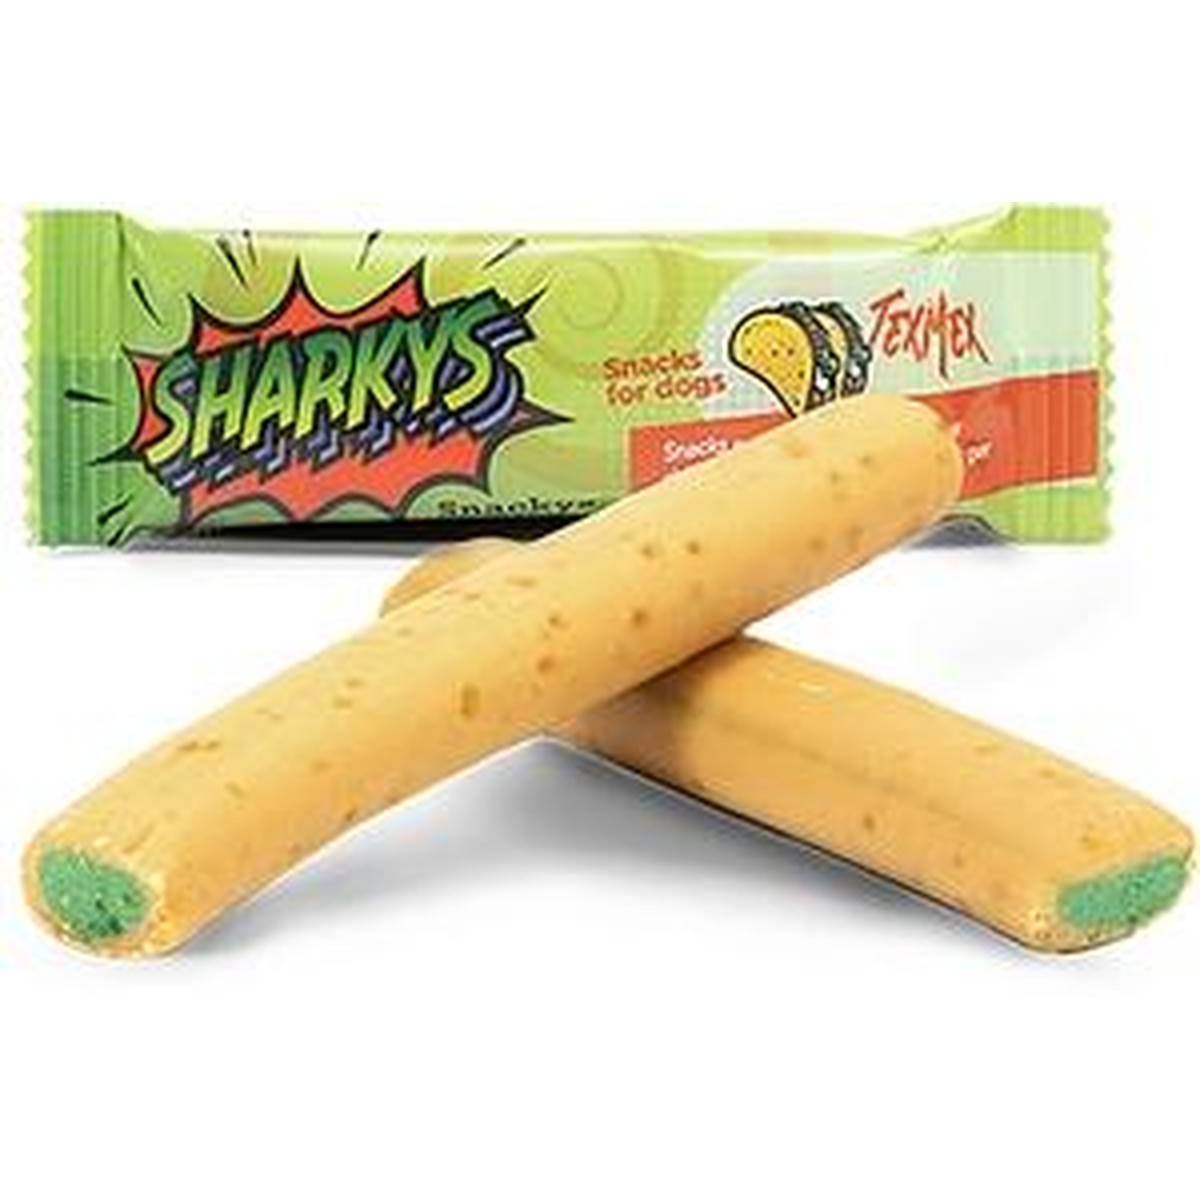   Sharkys Snack Bar TEX MEX, Display 42pces, 630g  200x120x120mm